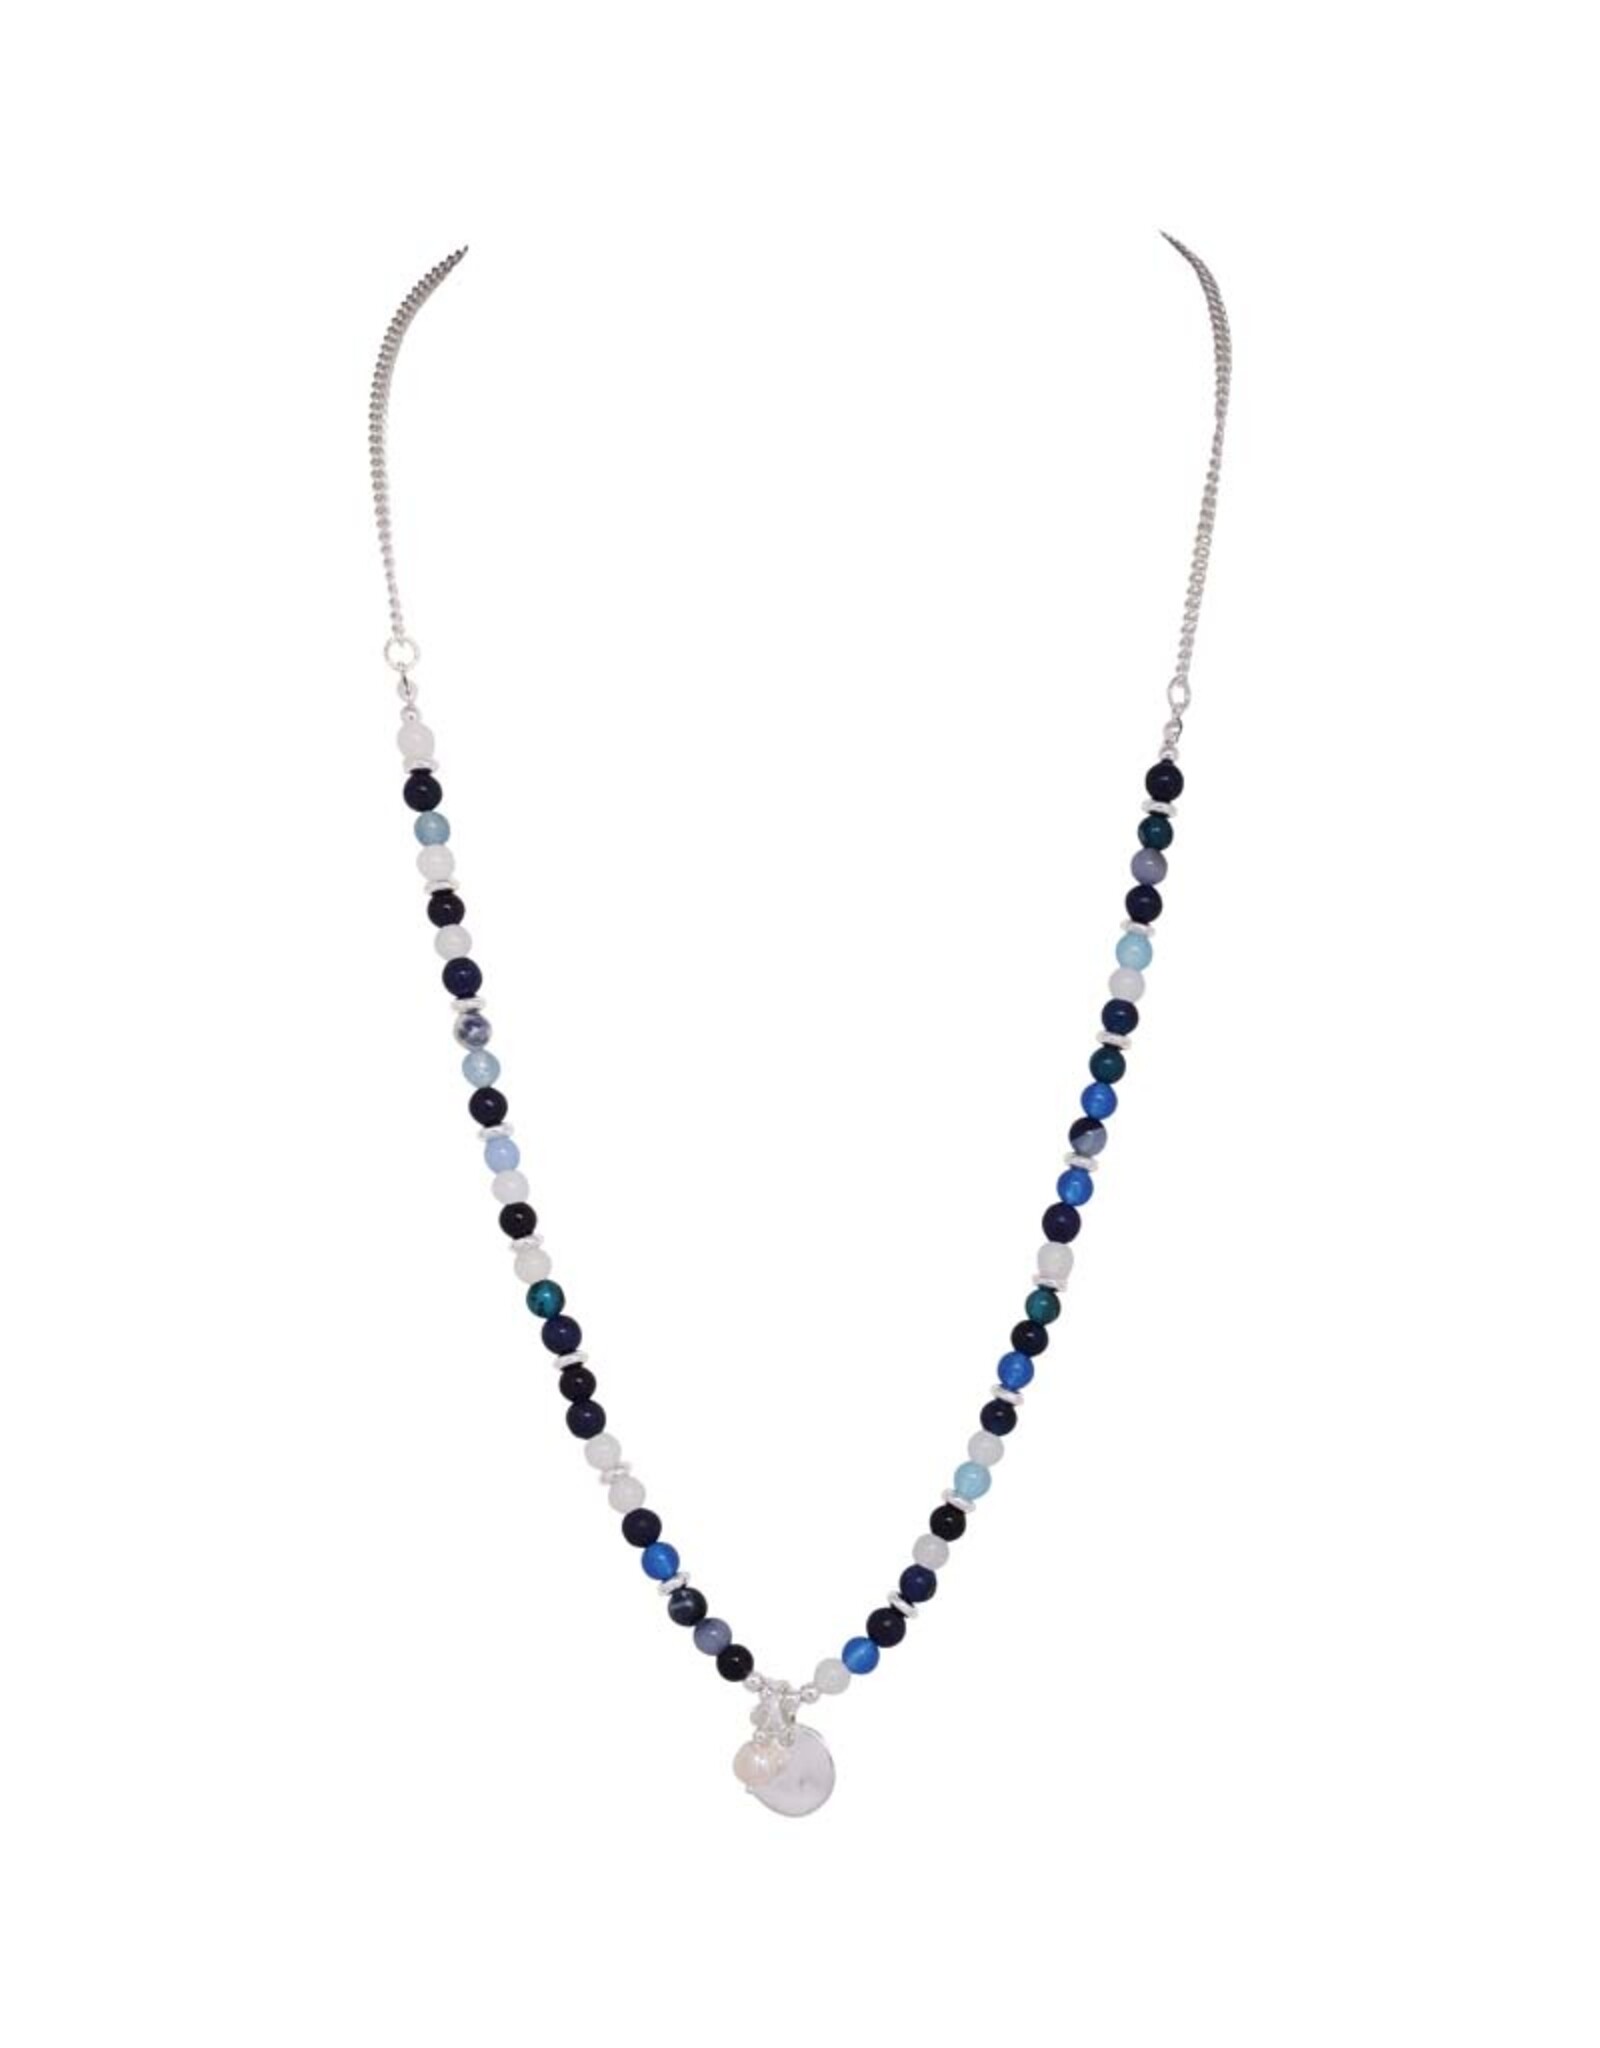 Merx Inc. Fashion Chain Necklace Silver Blue Aventurine 70cm+ext